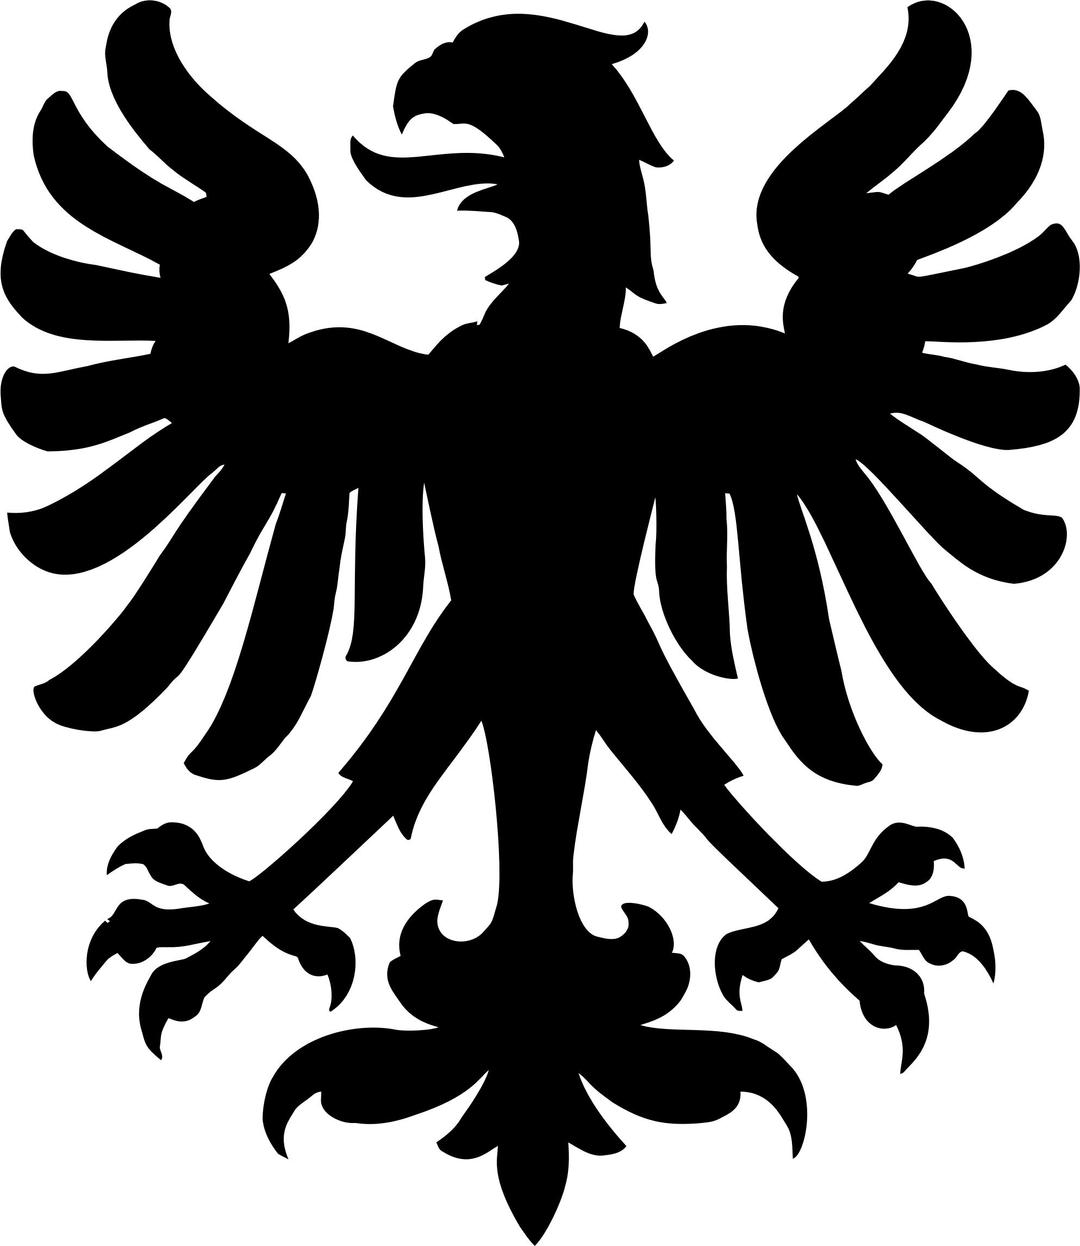 Zurich Eagle Silhouette png transparent